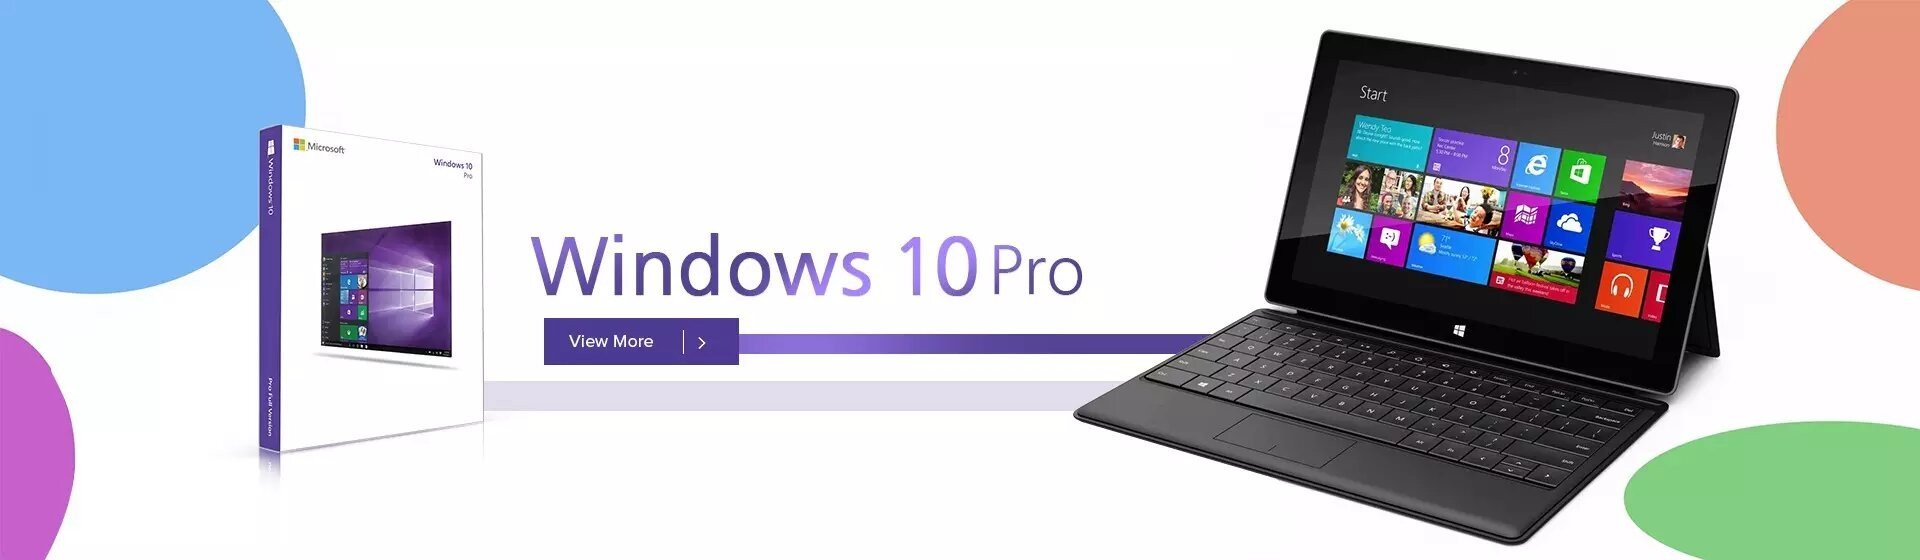 Windows 10 Pro 49.99 RON